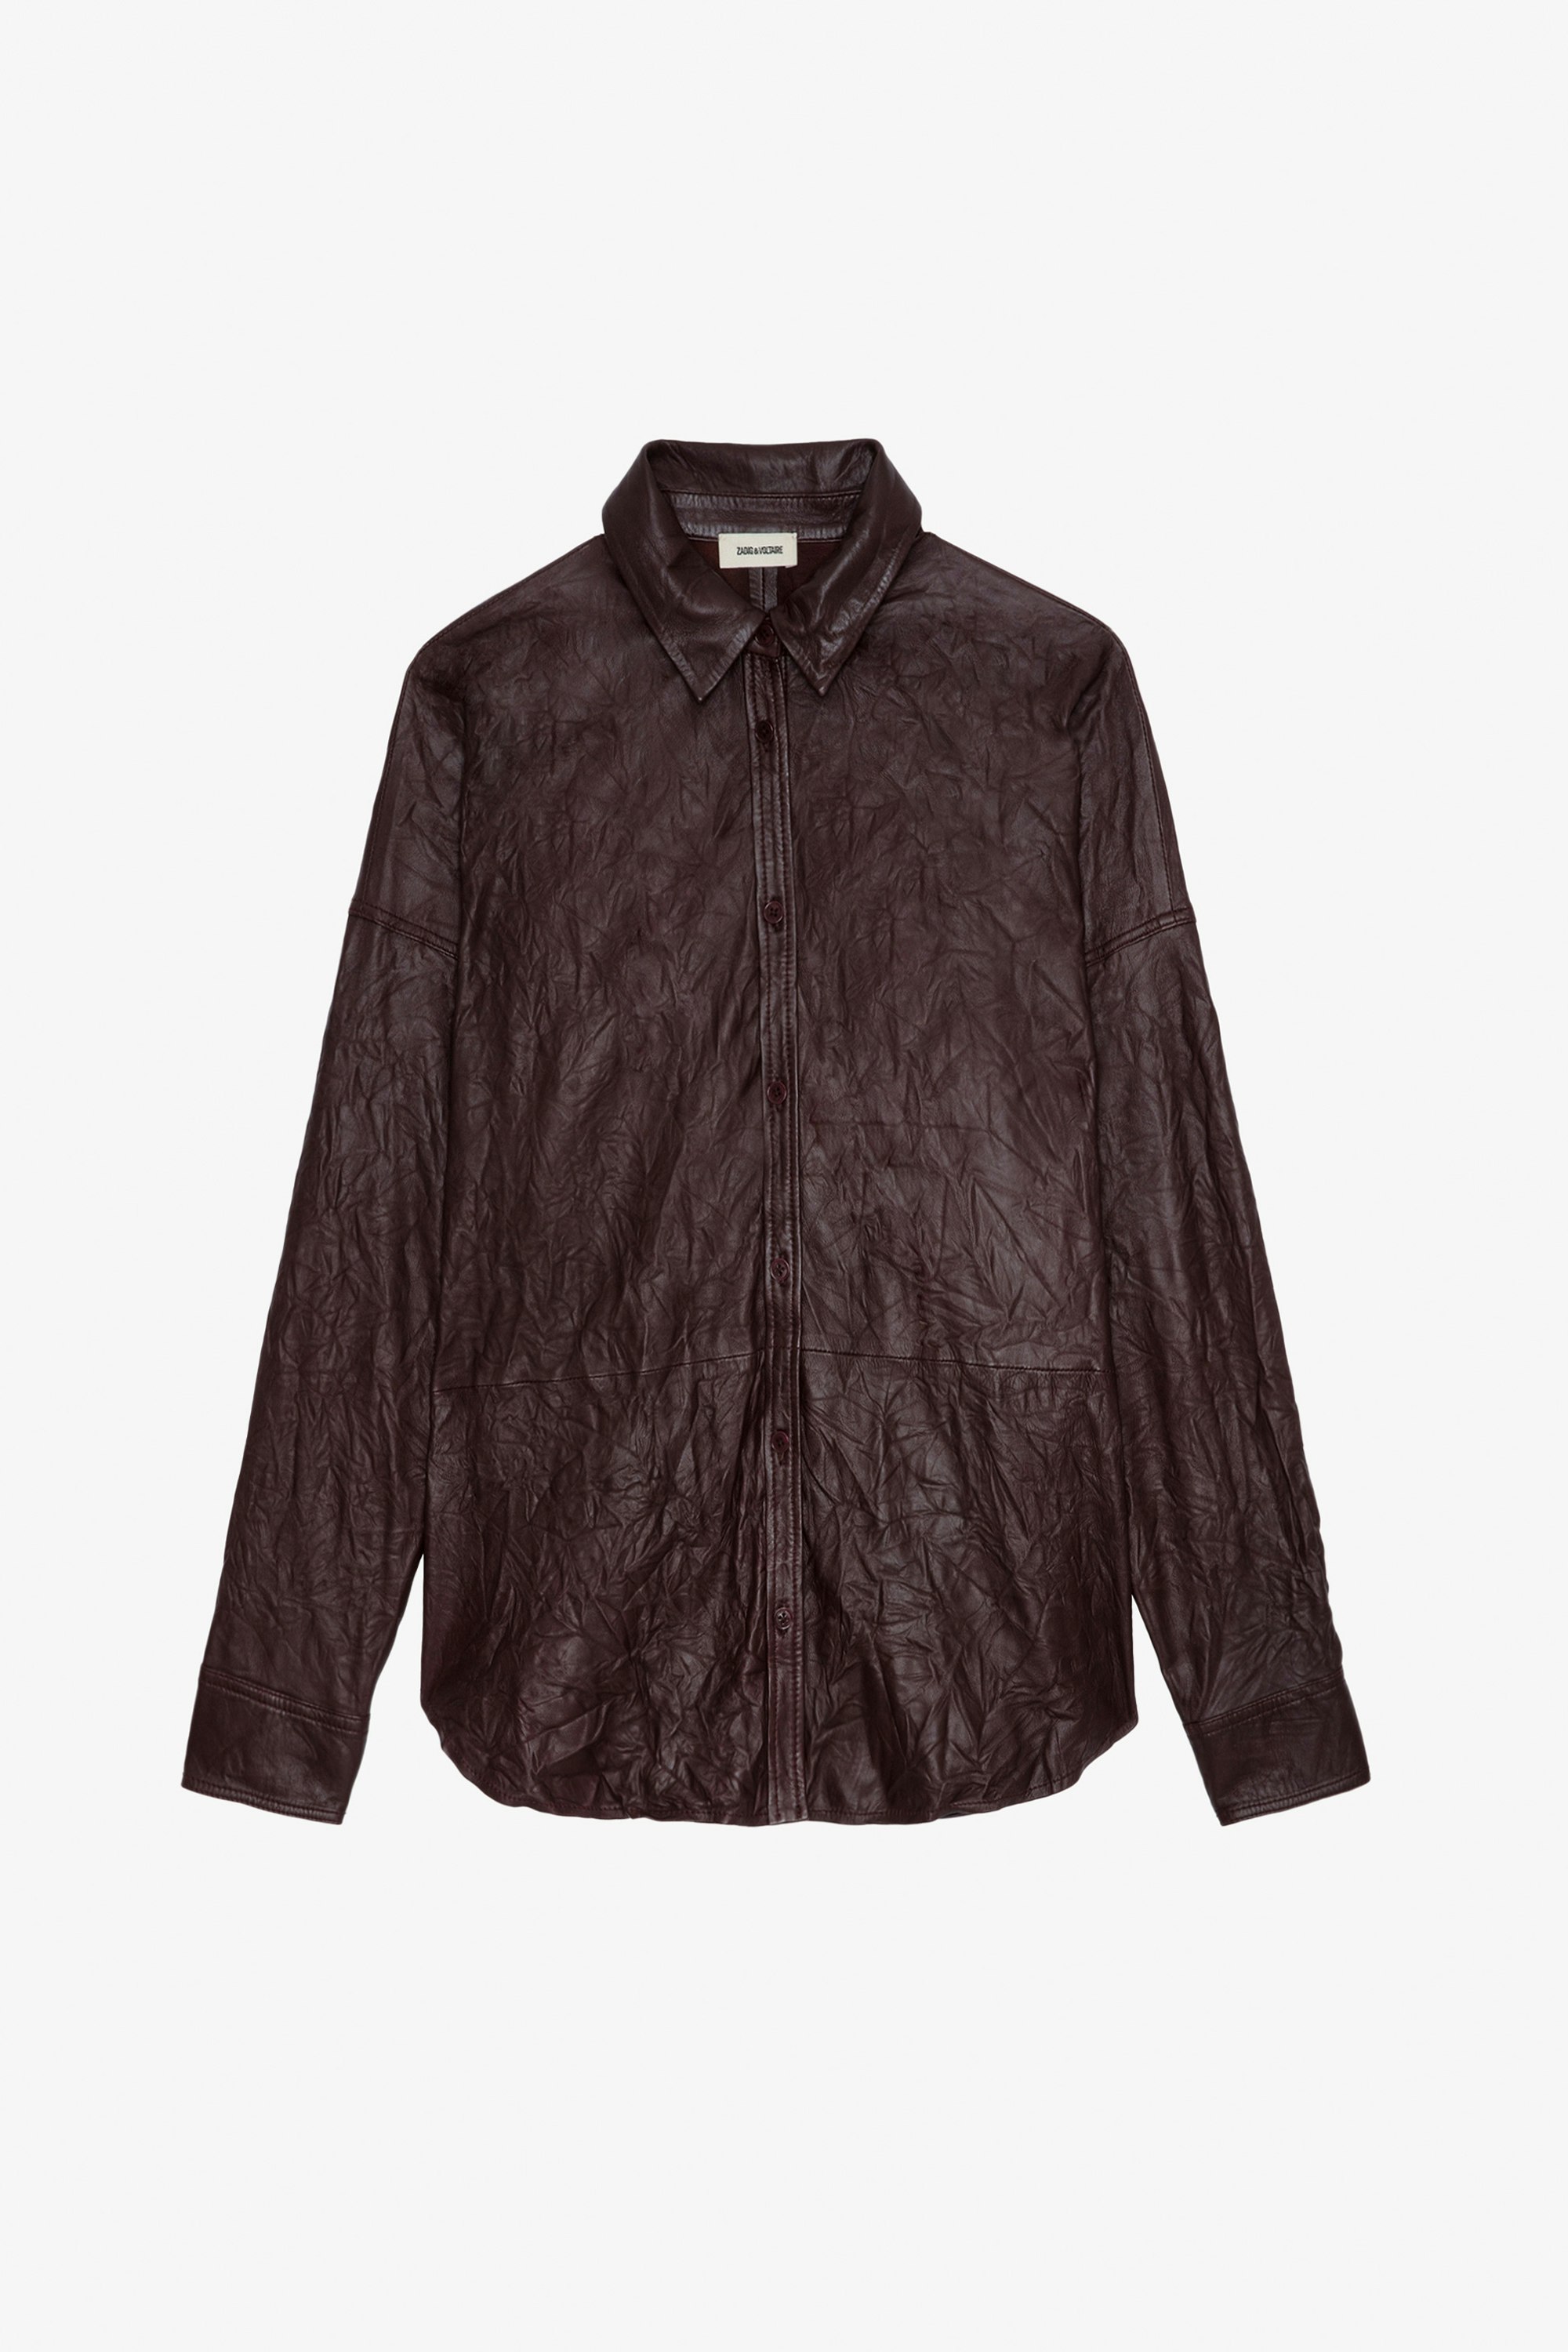 Tamara Crinkled Leather Shirt - Women’s brown crinkled leather shirt.